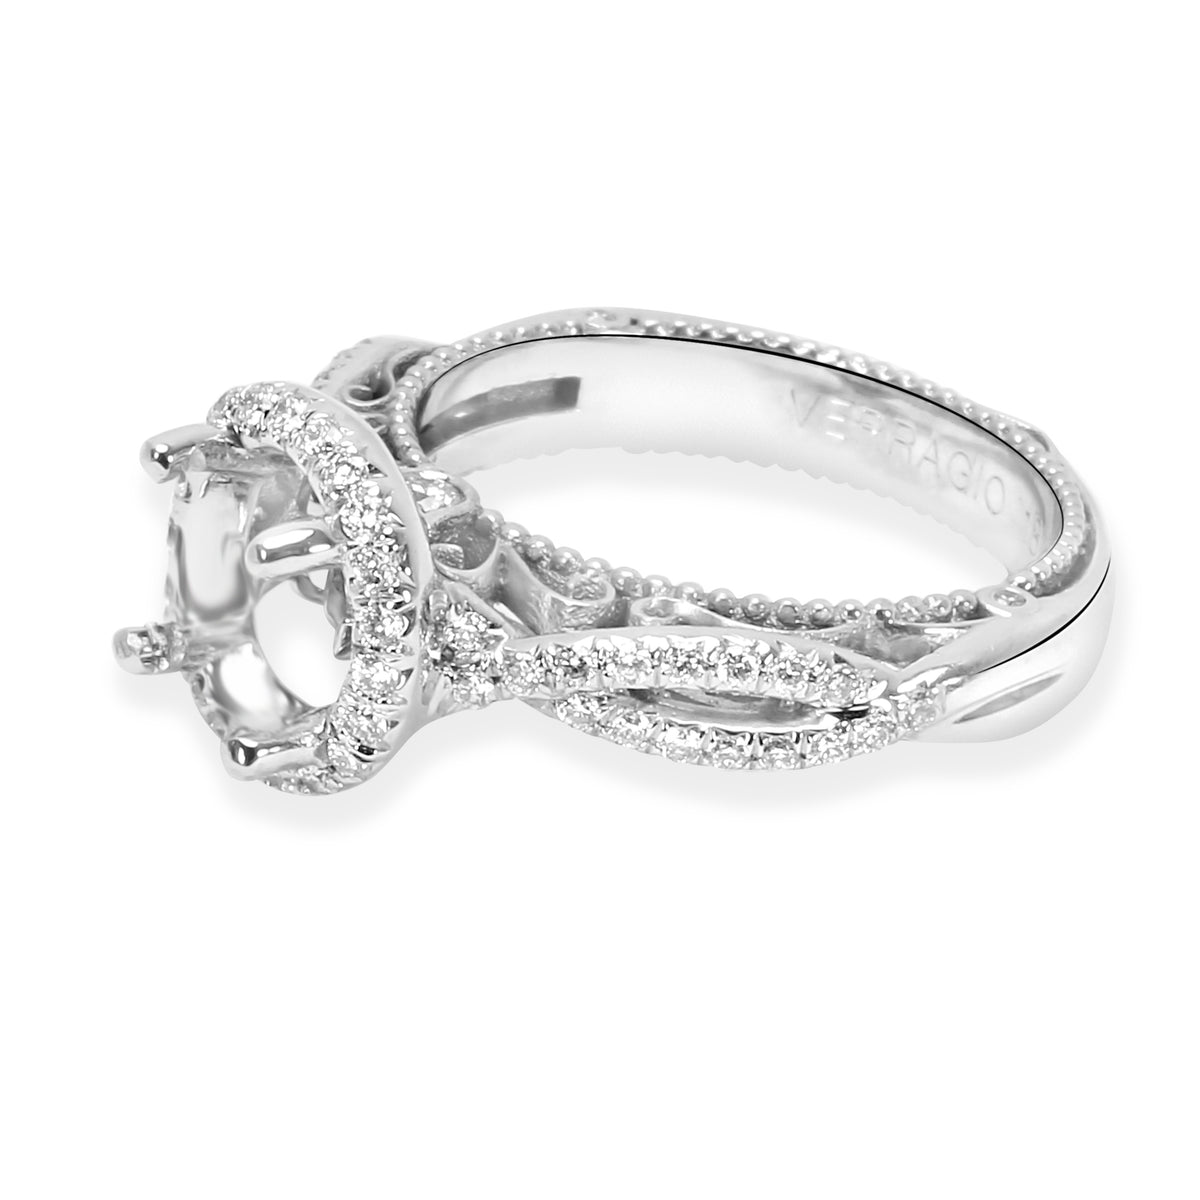 Verragio Venetian Collection Diamond Engagement Ring Setting in 18K White Gold